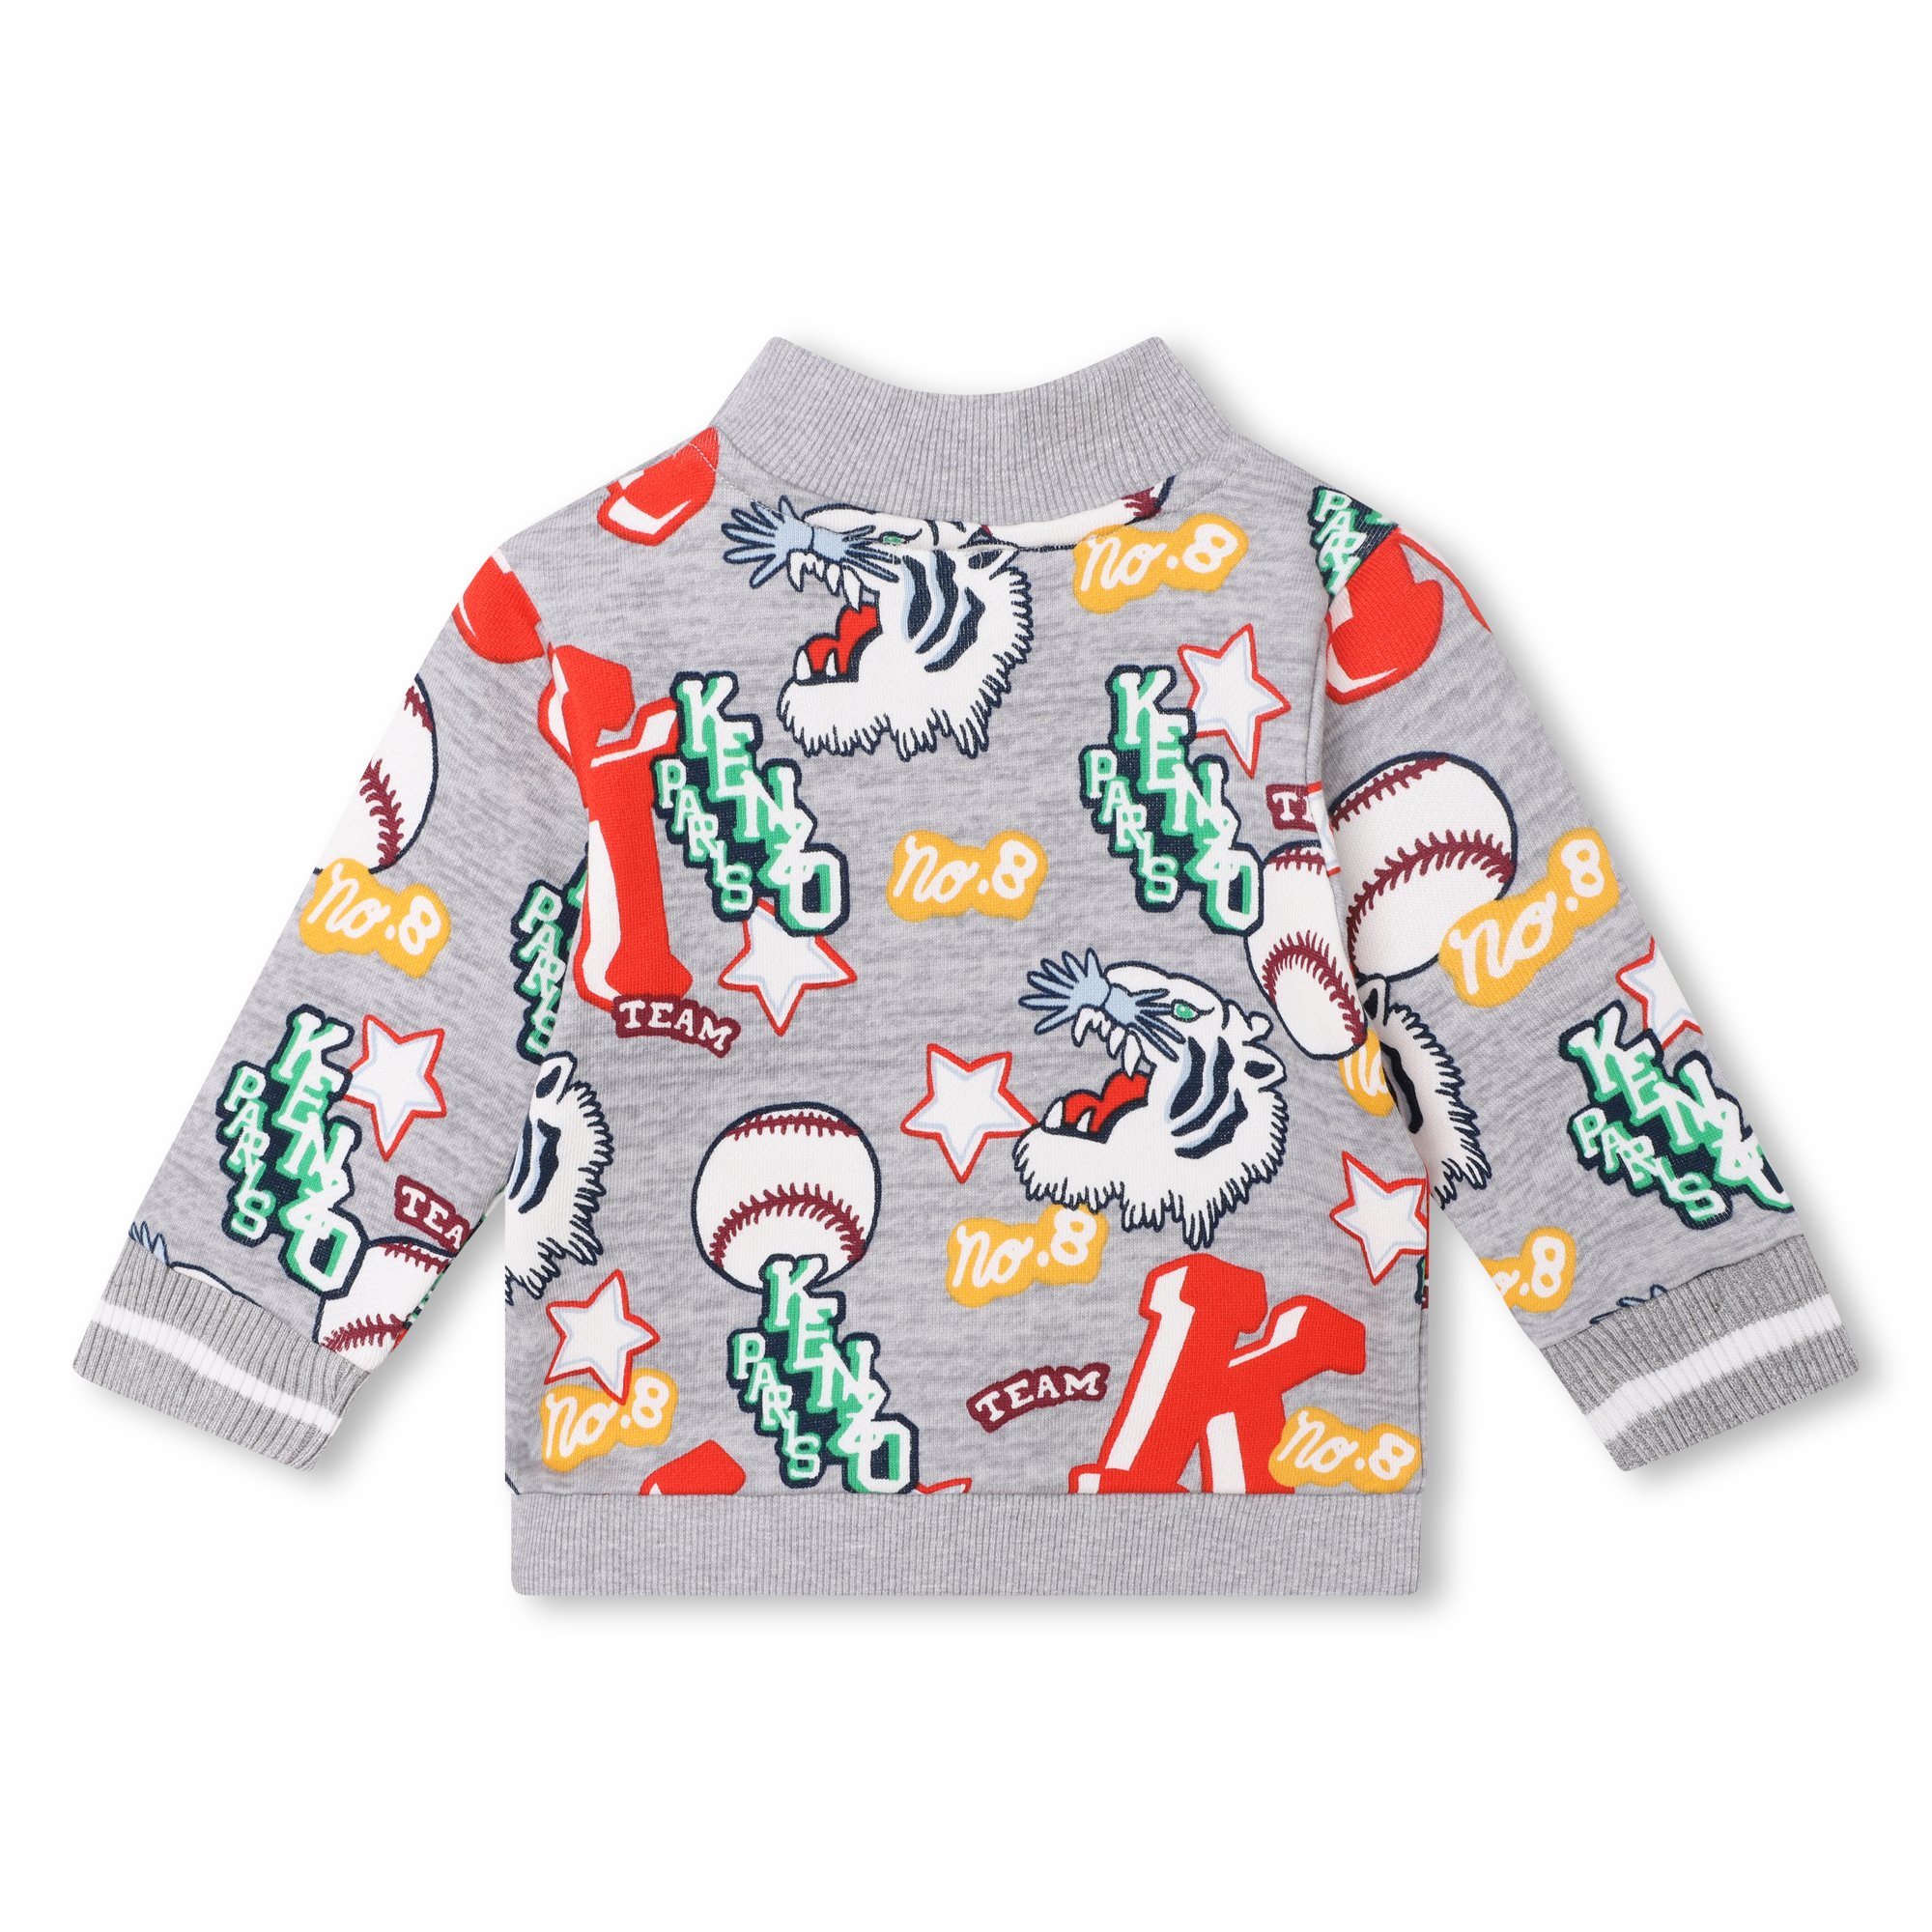 Printed cotton sweatshirt KENZO KIDS for BOY